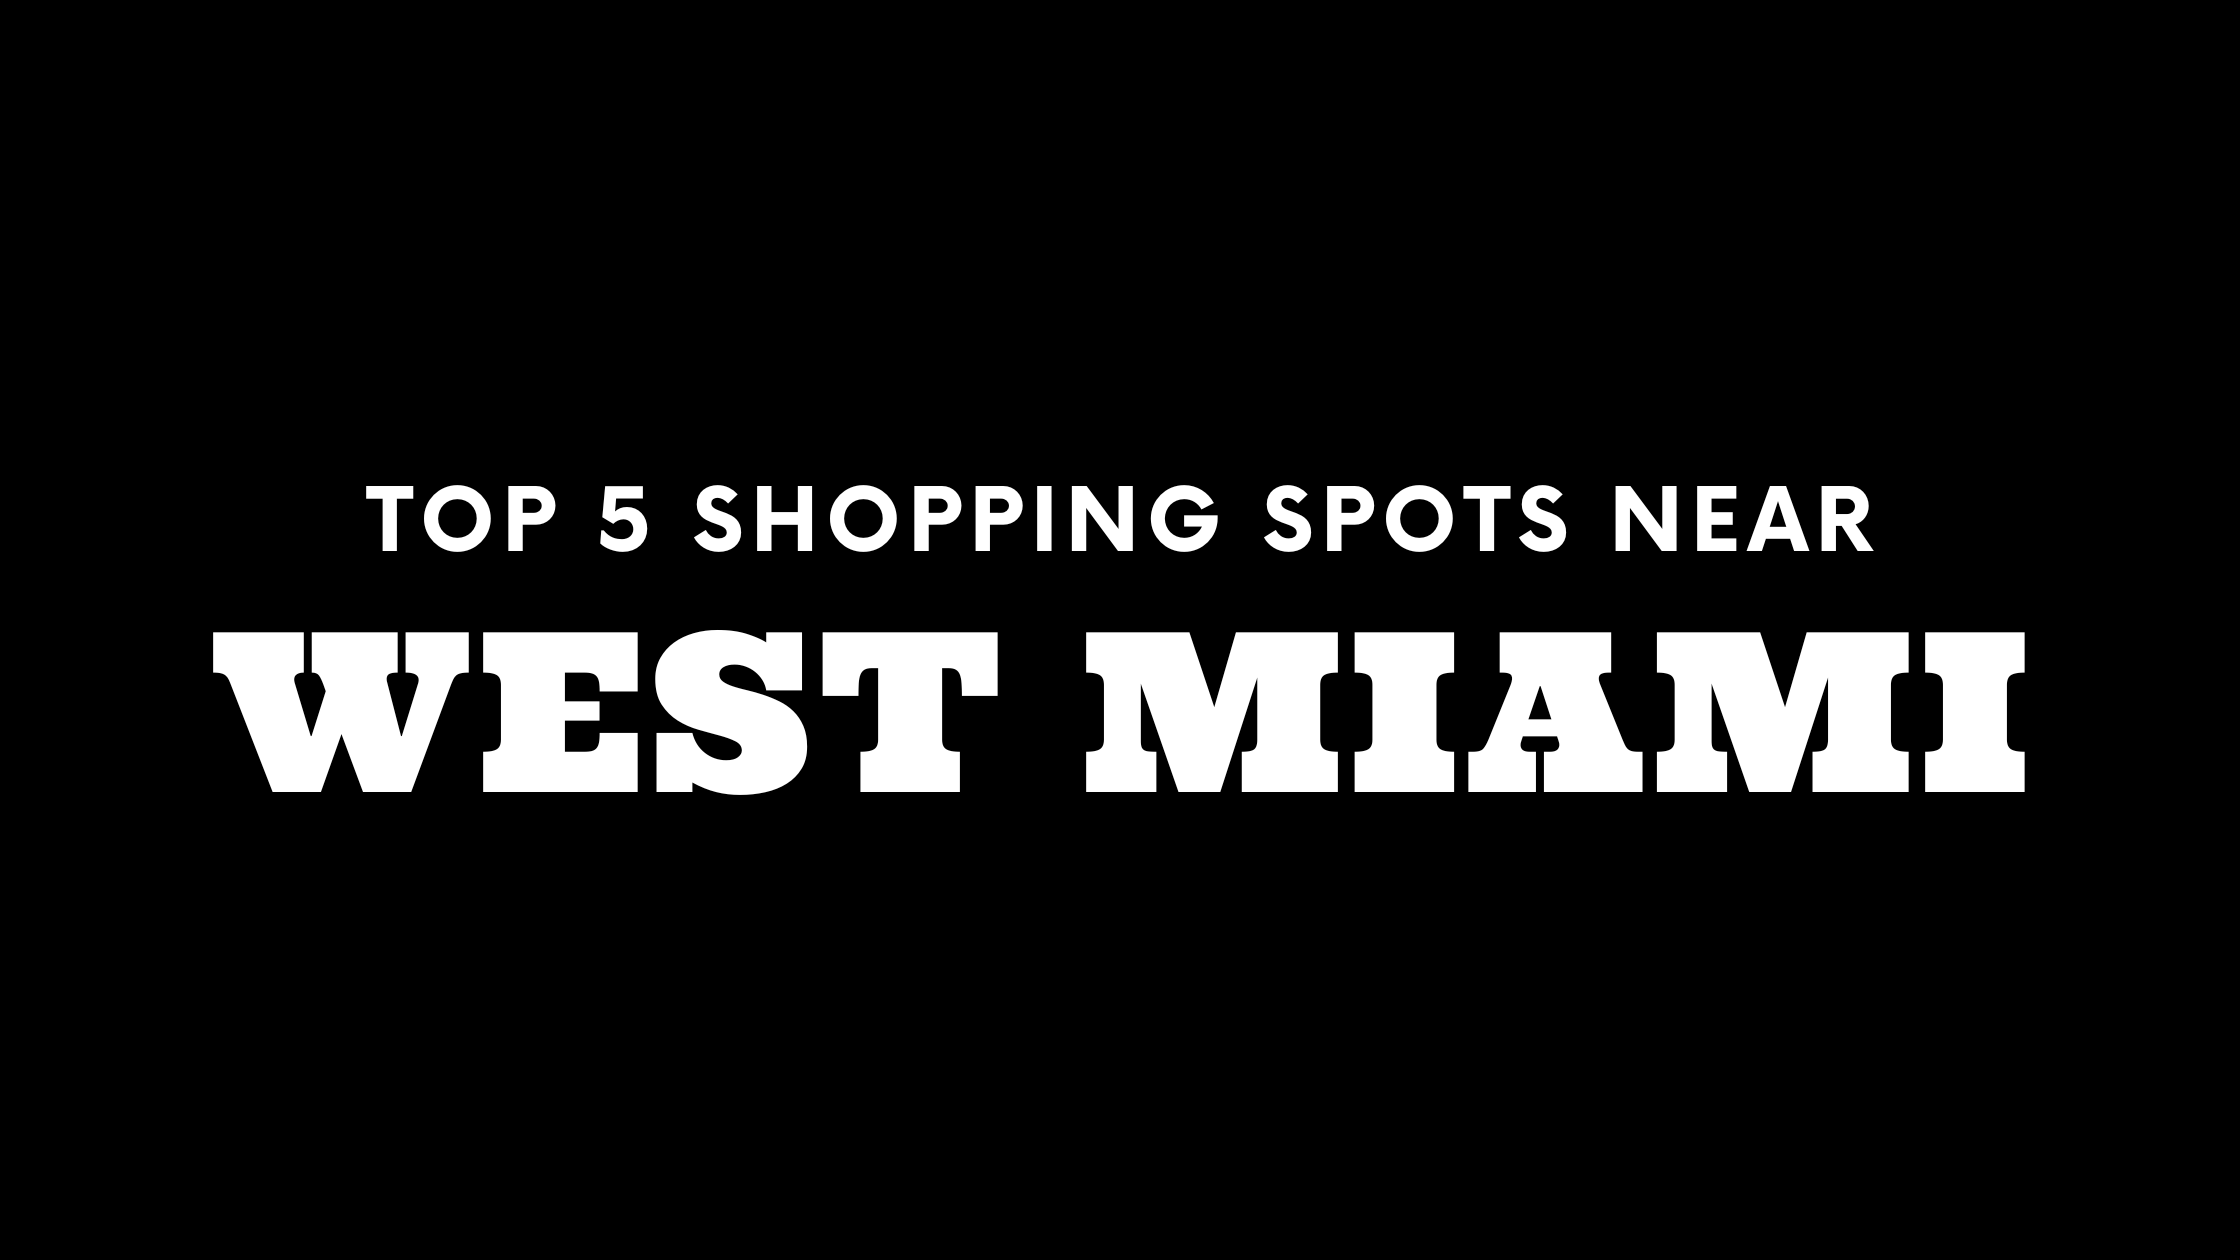 Top 5 Shopping Spots Near West Miami